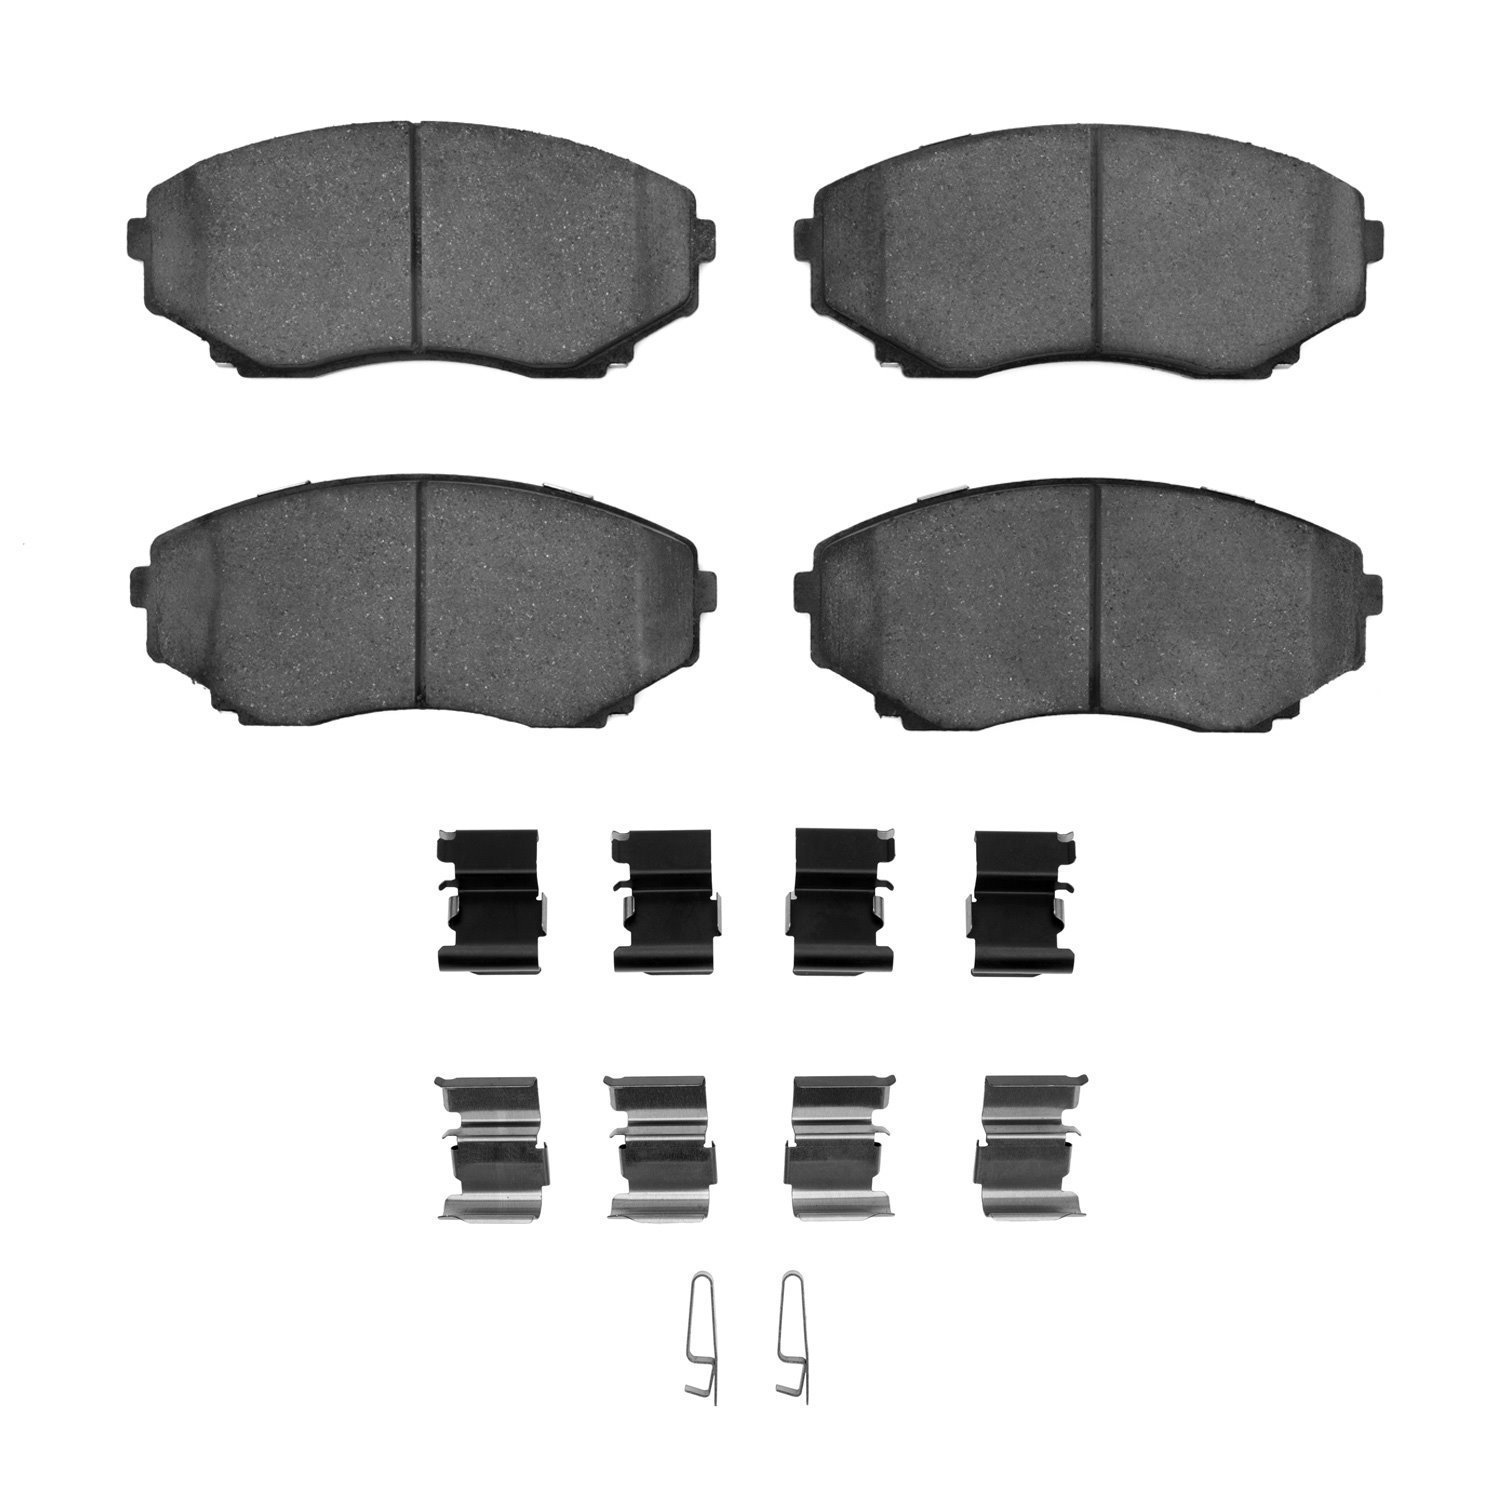 1310-0551-01 3000-Series Ceramic Brake Pads & Hardware Kit, 1992-2006 Ford/Lincoln/Mercury/Mazda, Position: Front